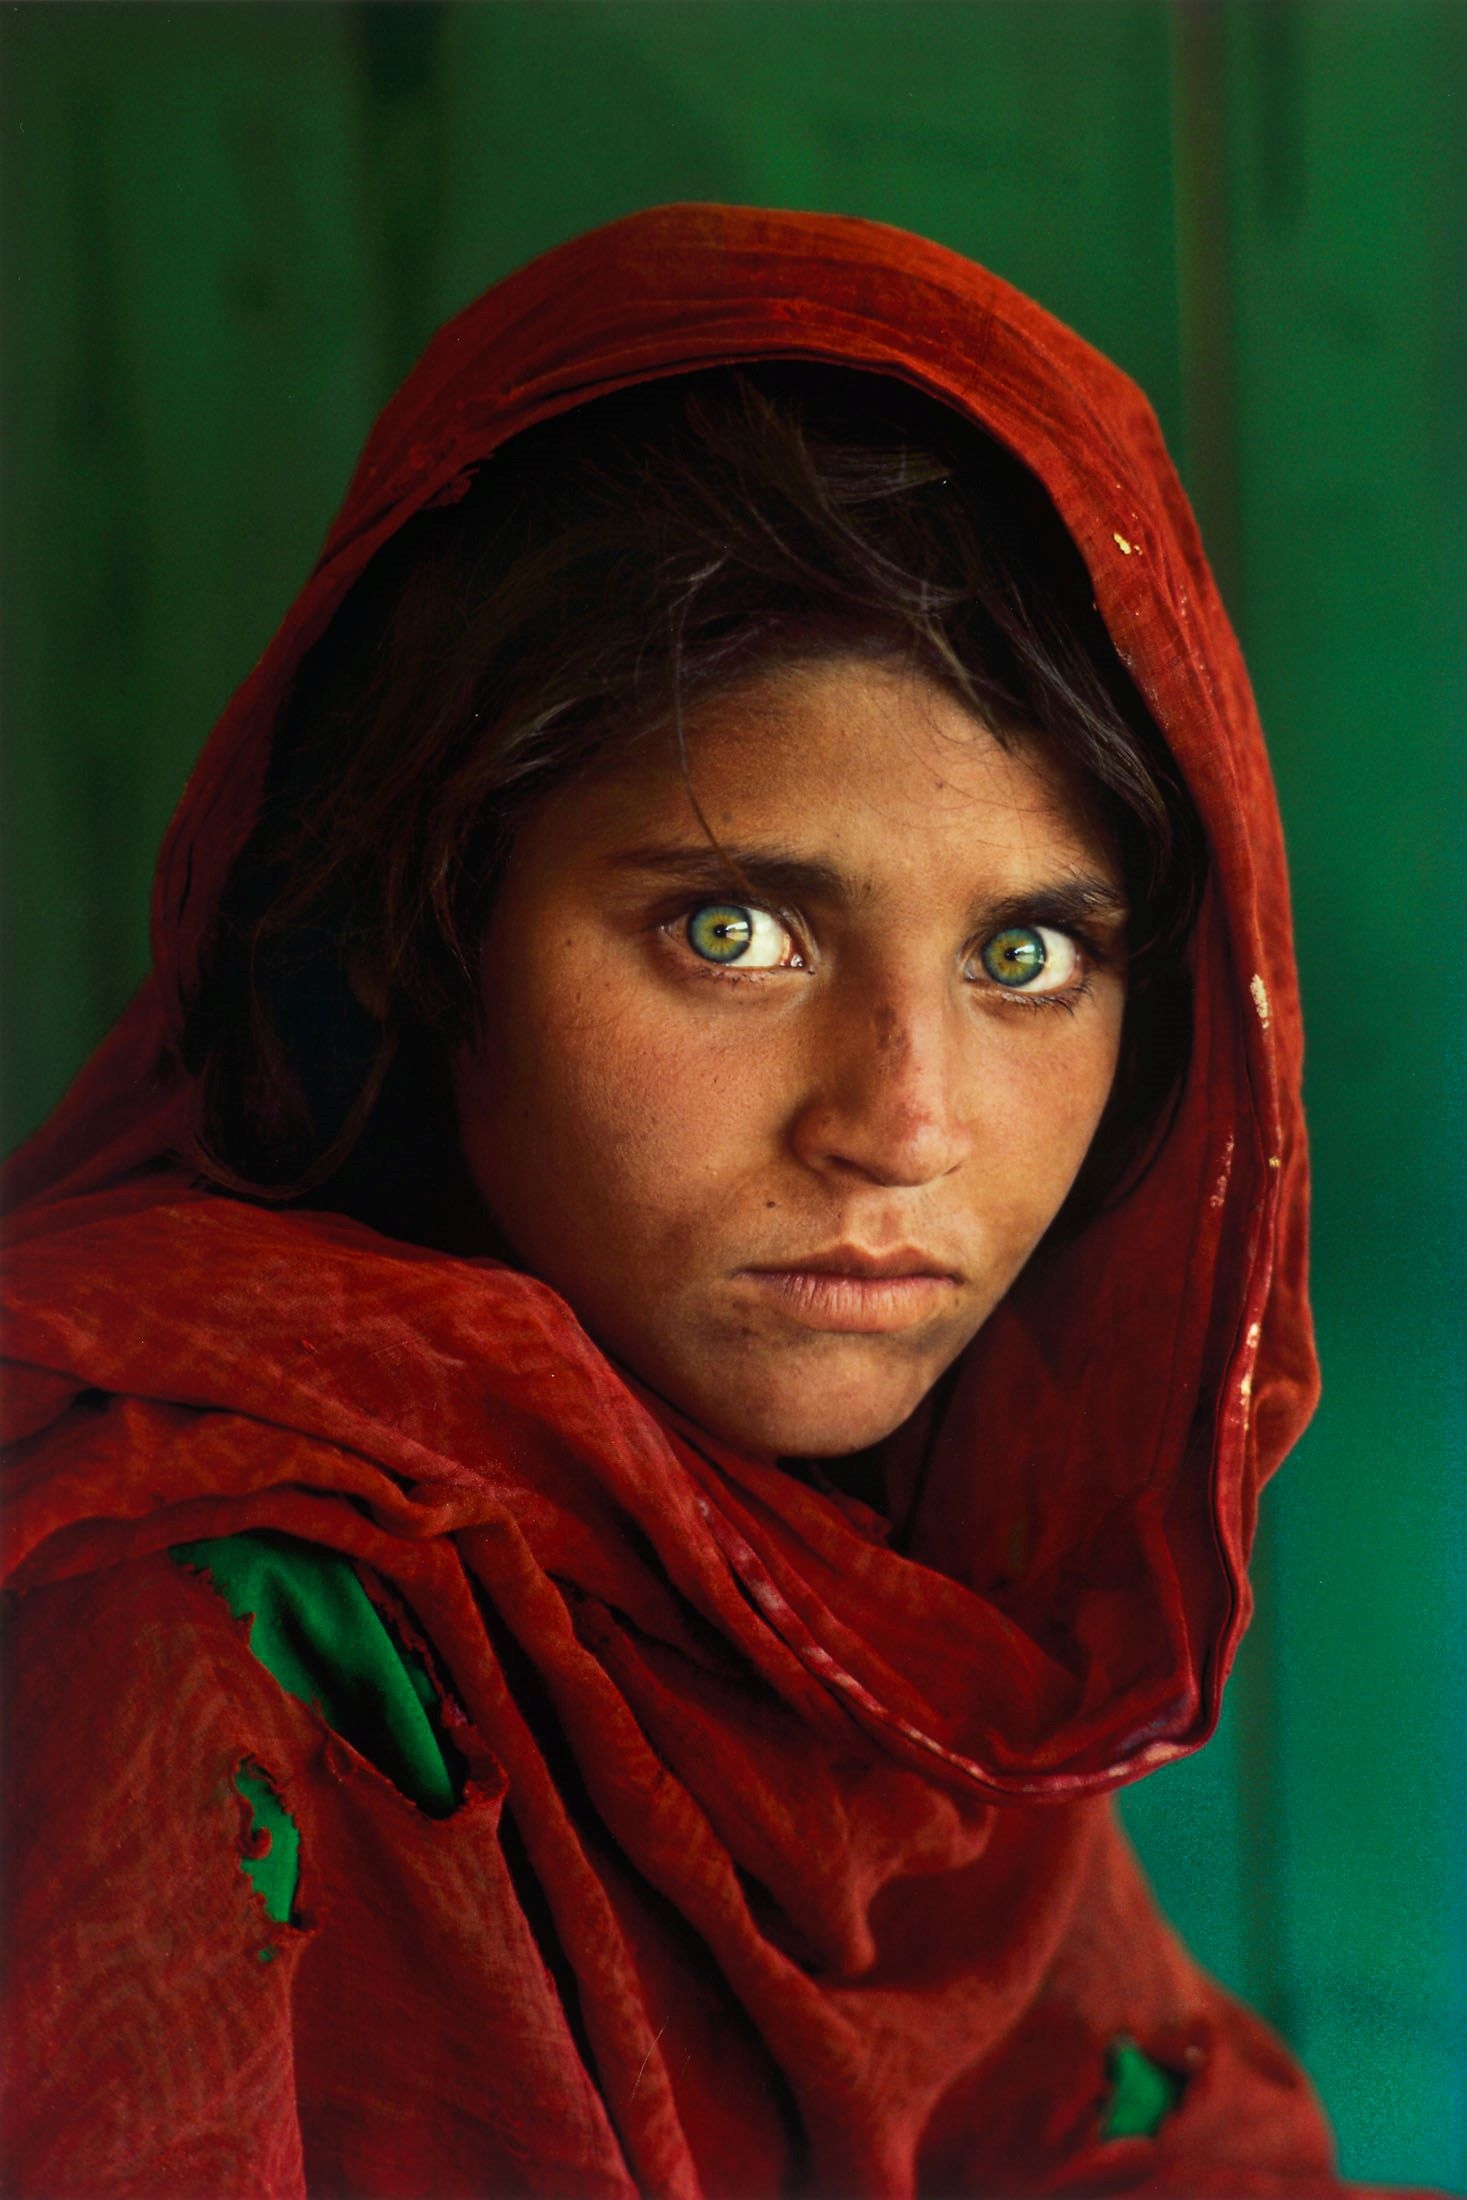 Afghan Girl, Peshawar by Steve McCurry, 1984